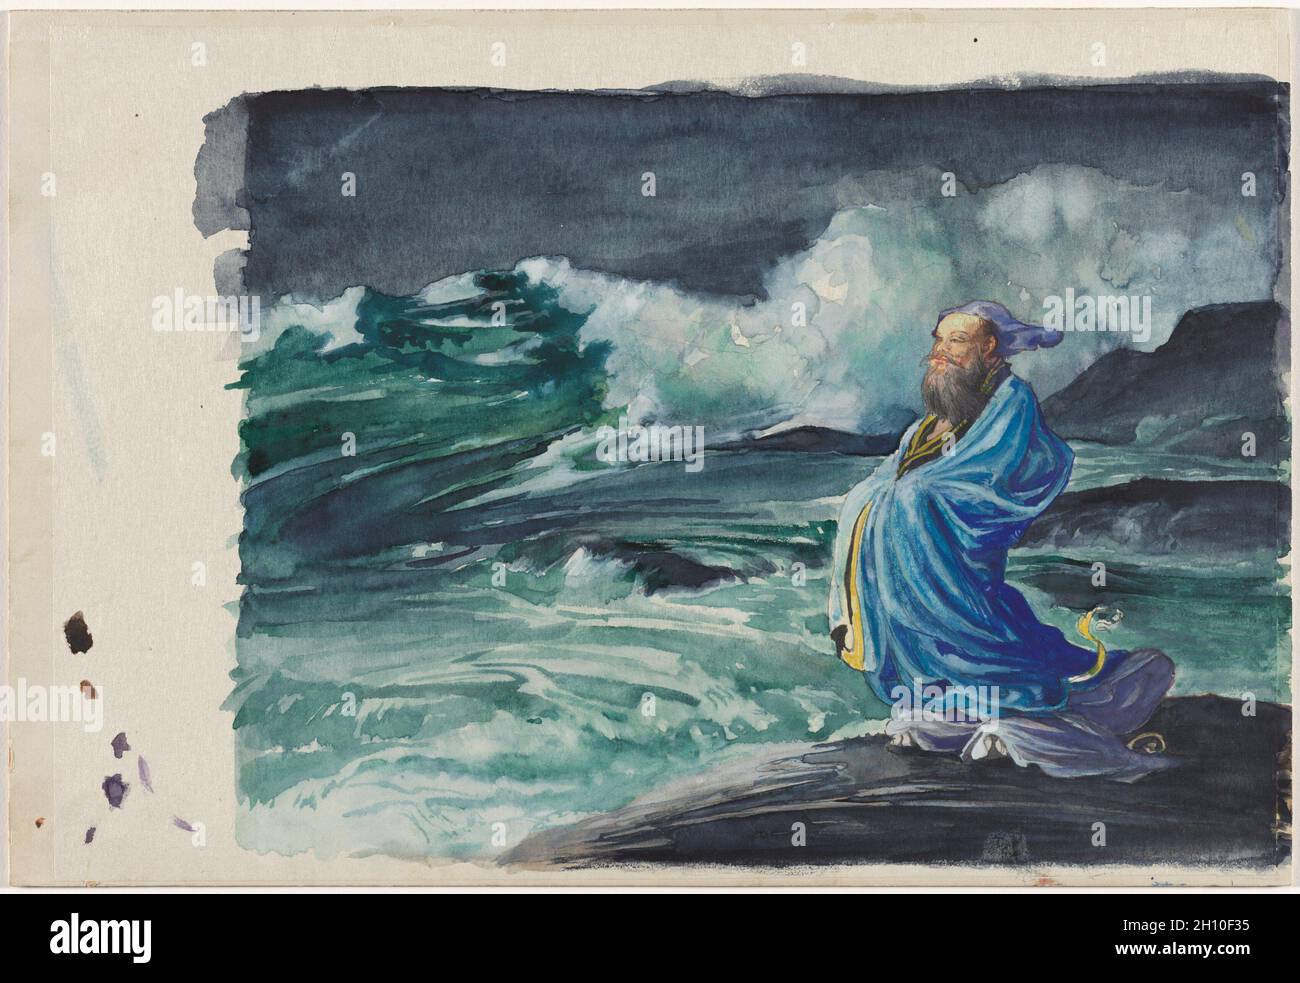 A Rishi Stirring Up a Storm, 1897. John La Farge (American, 1835-1910).  Watercolor and gouache